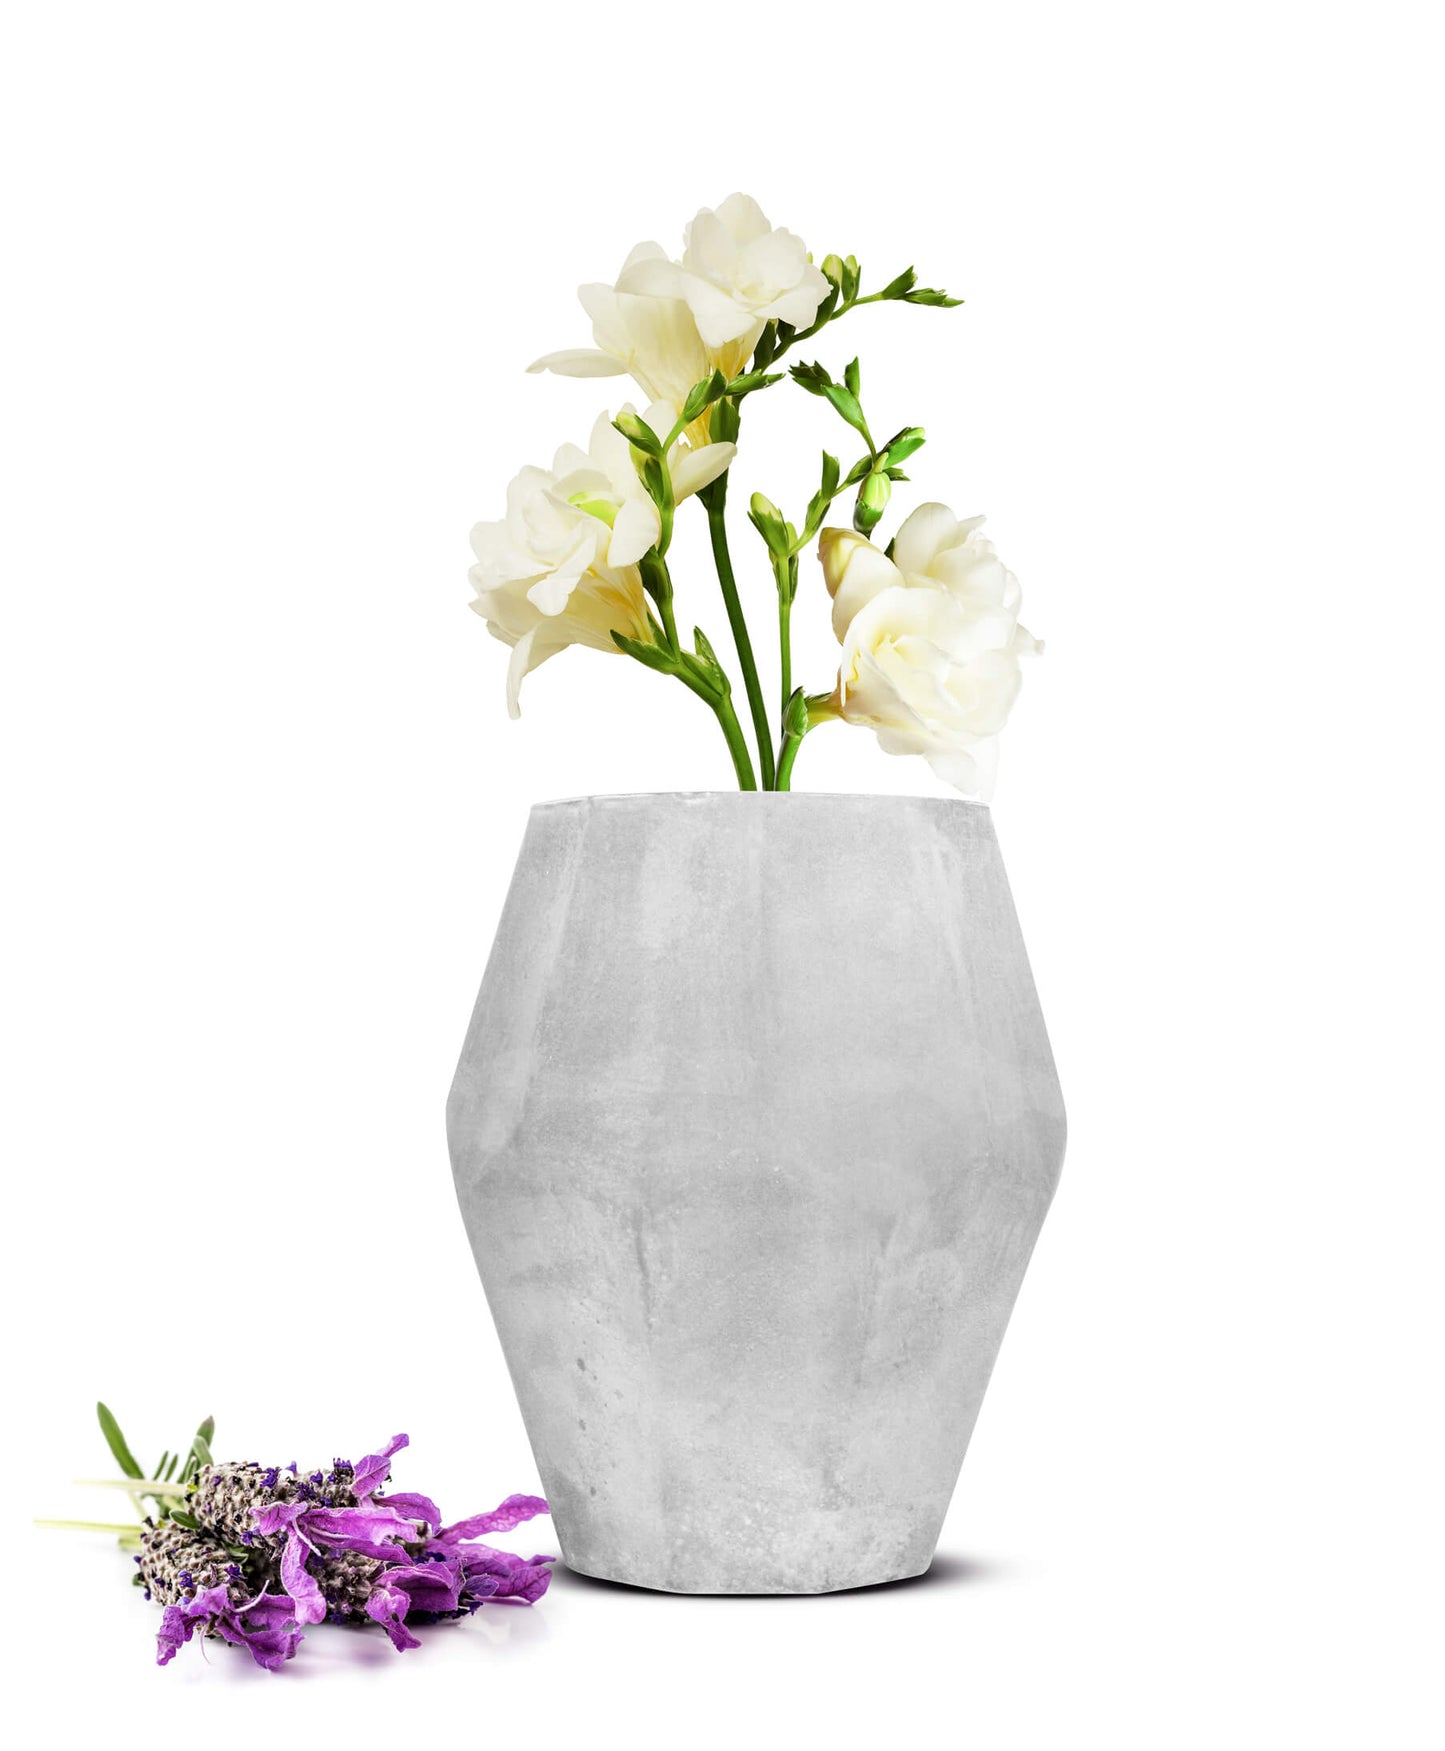 Flower vase Emilia table vase glass vase decorative vase table decoration